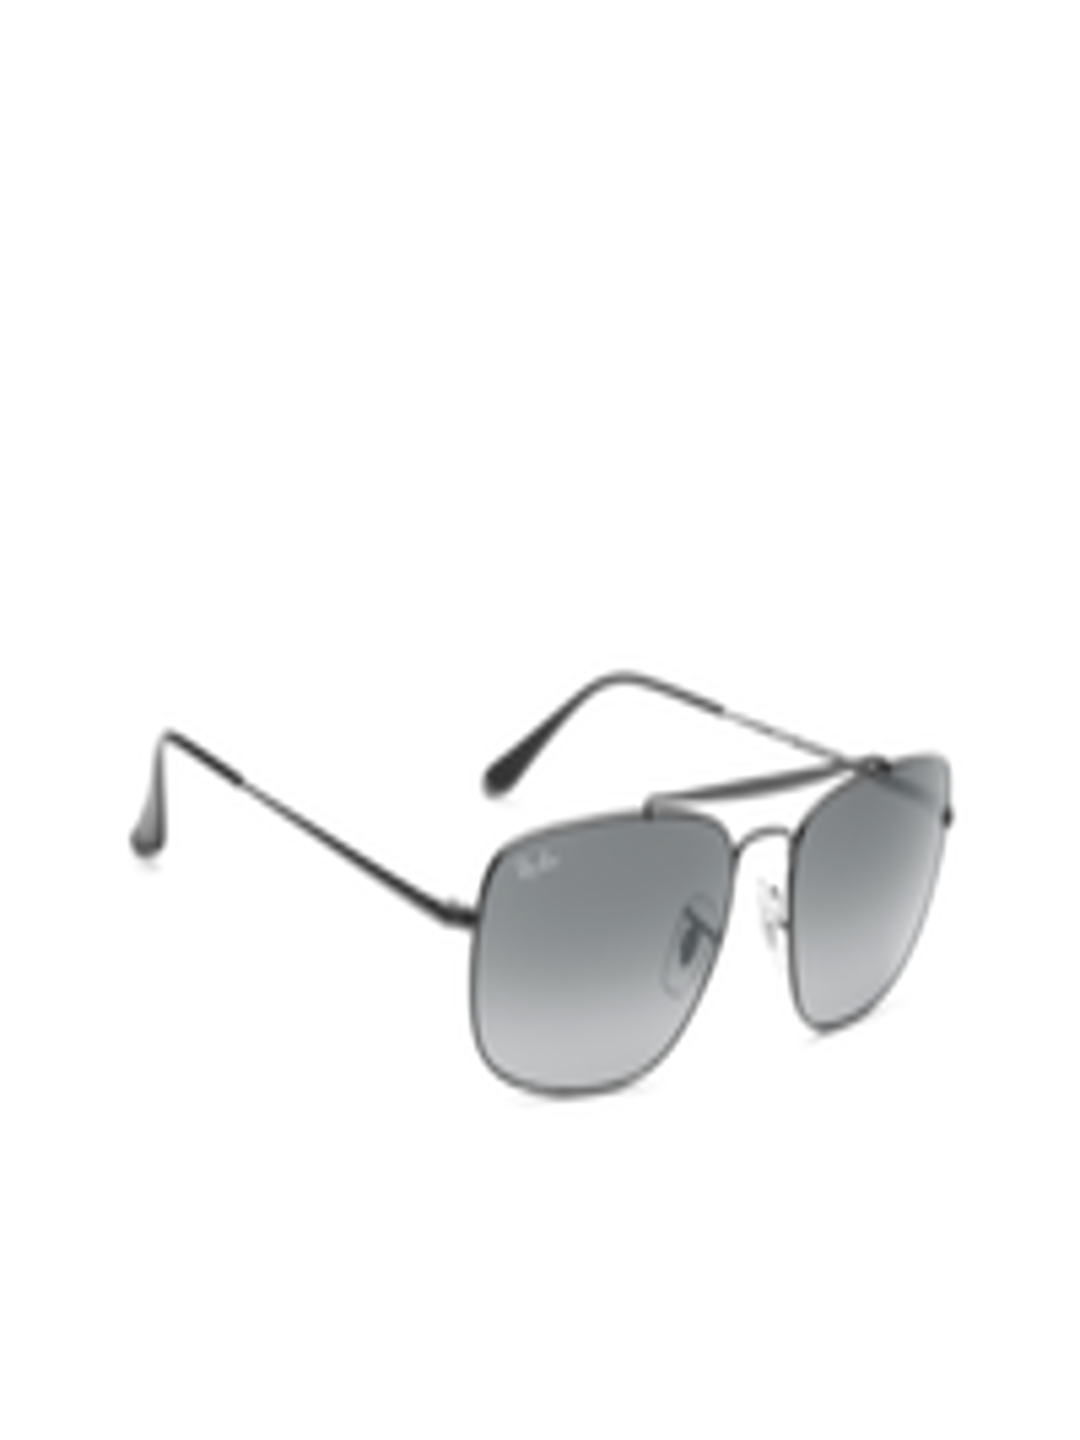 Buy Ray Ban Men Rectangle Sunglasses 0RB3560002/7158 - Sunglasses for ...